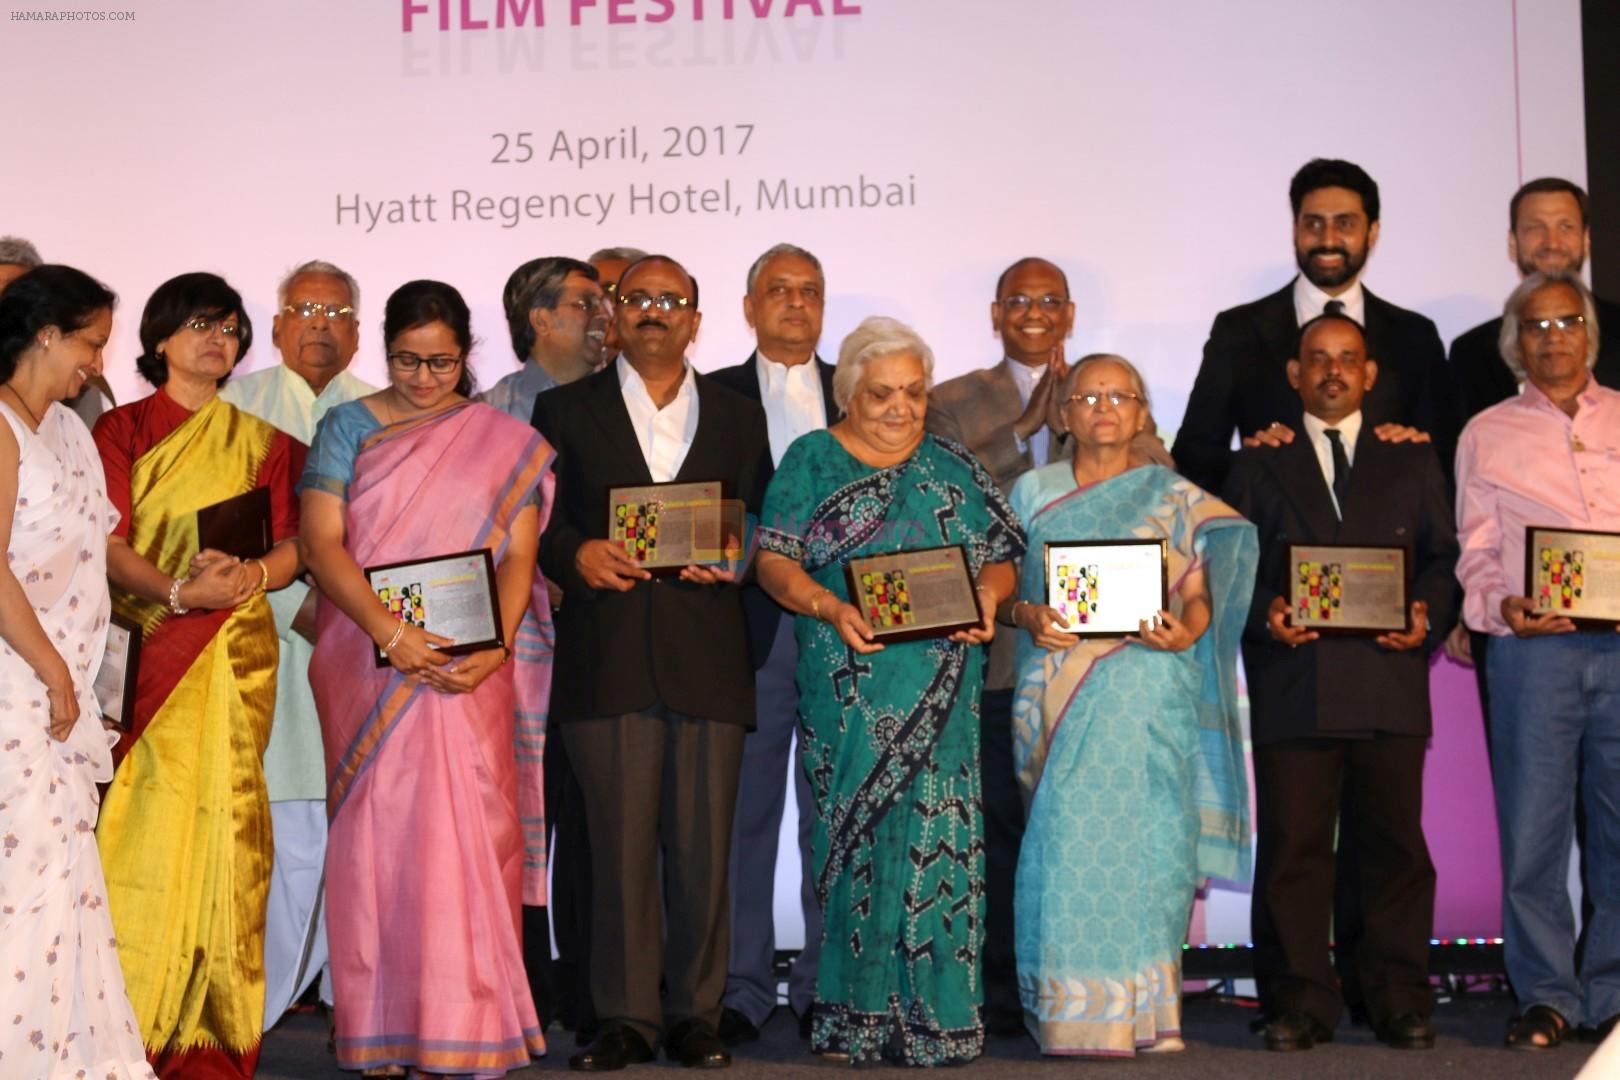 Abhishek Bachchan Attend Green Heros Film Festival on 25th April 2017